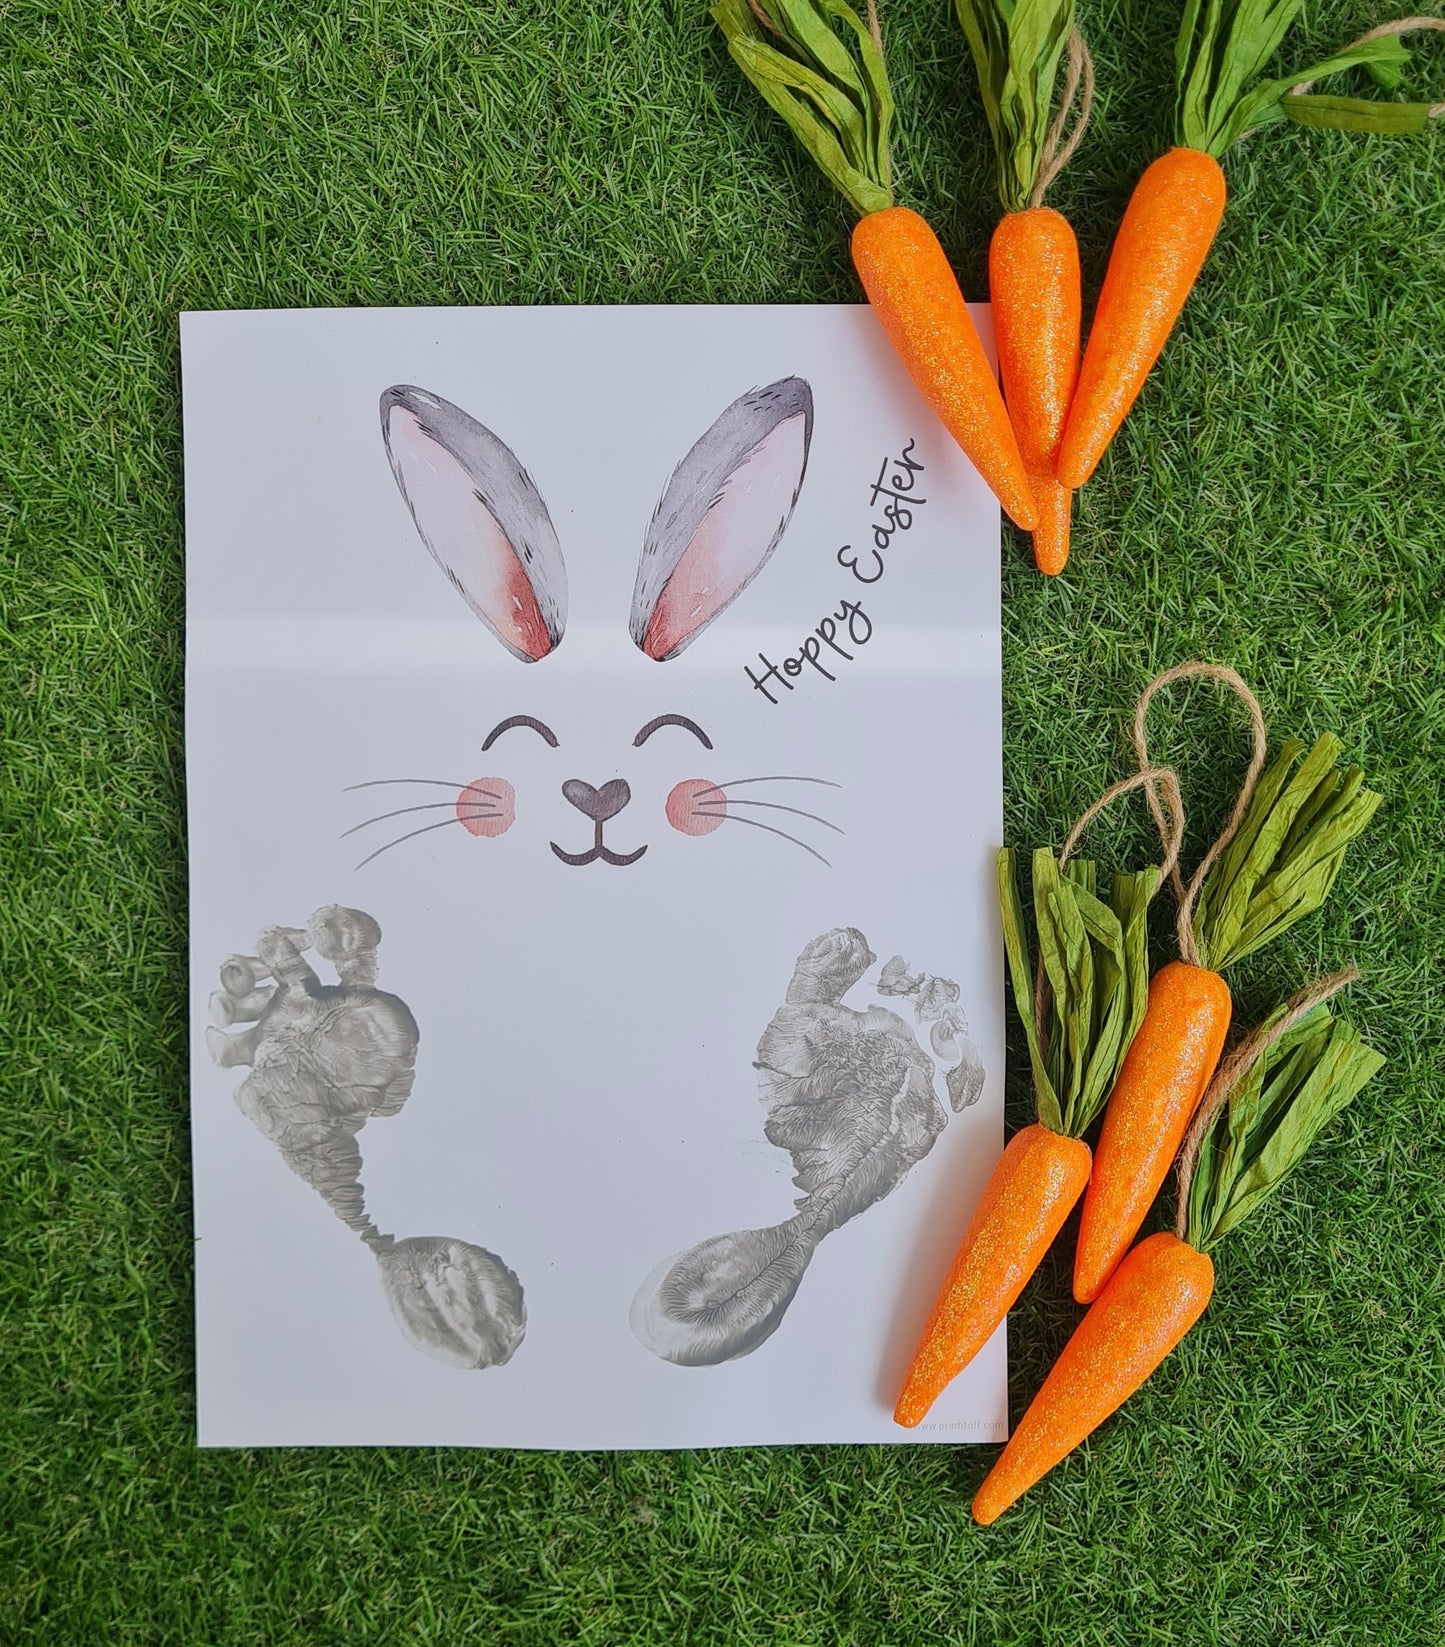 Hoppy Happy Easter Bunny / Footprint Handprint Art / Baby Toddler / Keepsake Memory Craft DIY Card / Print It Off 0830